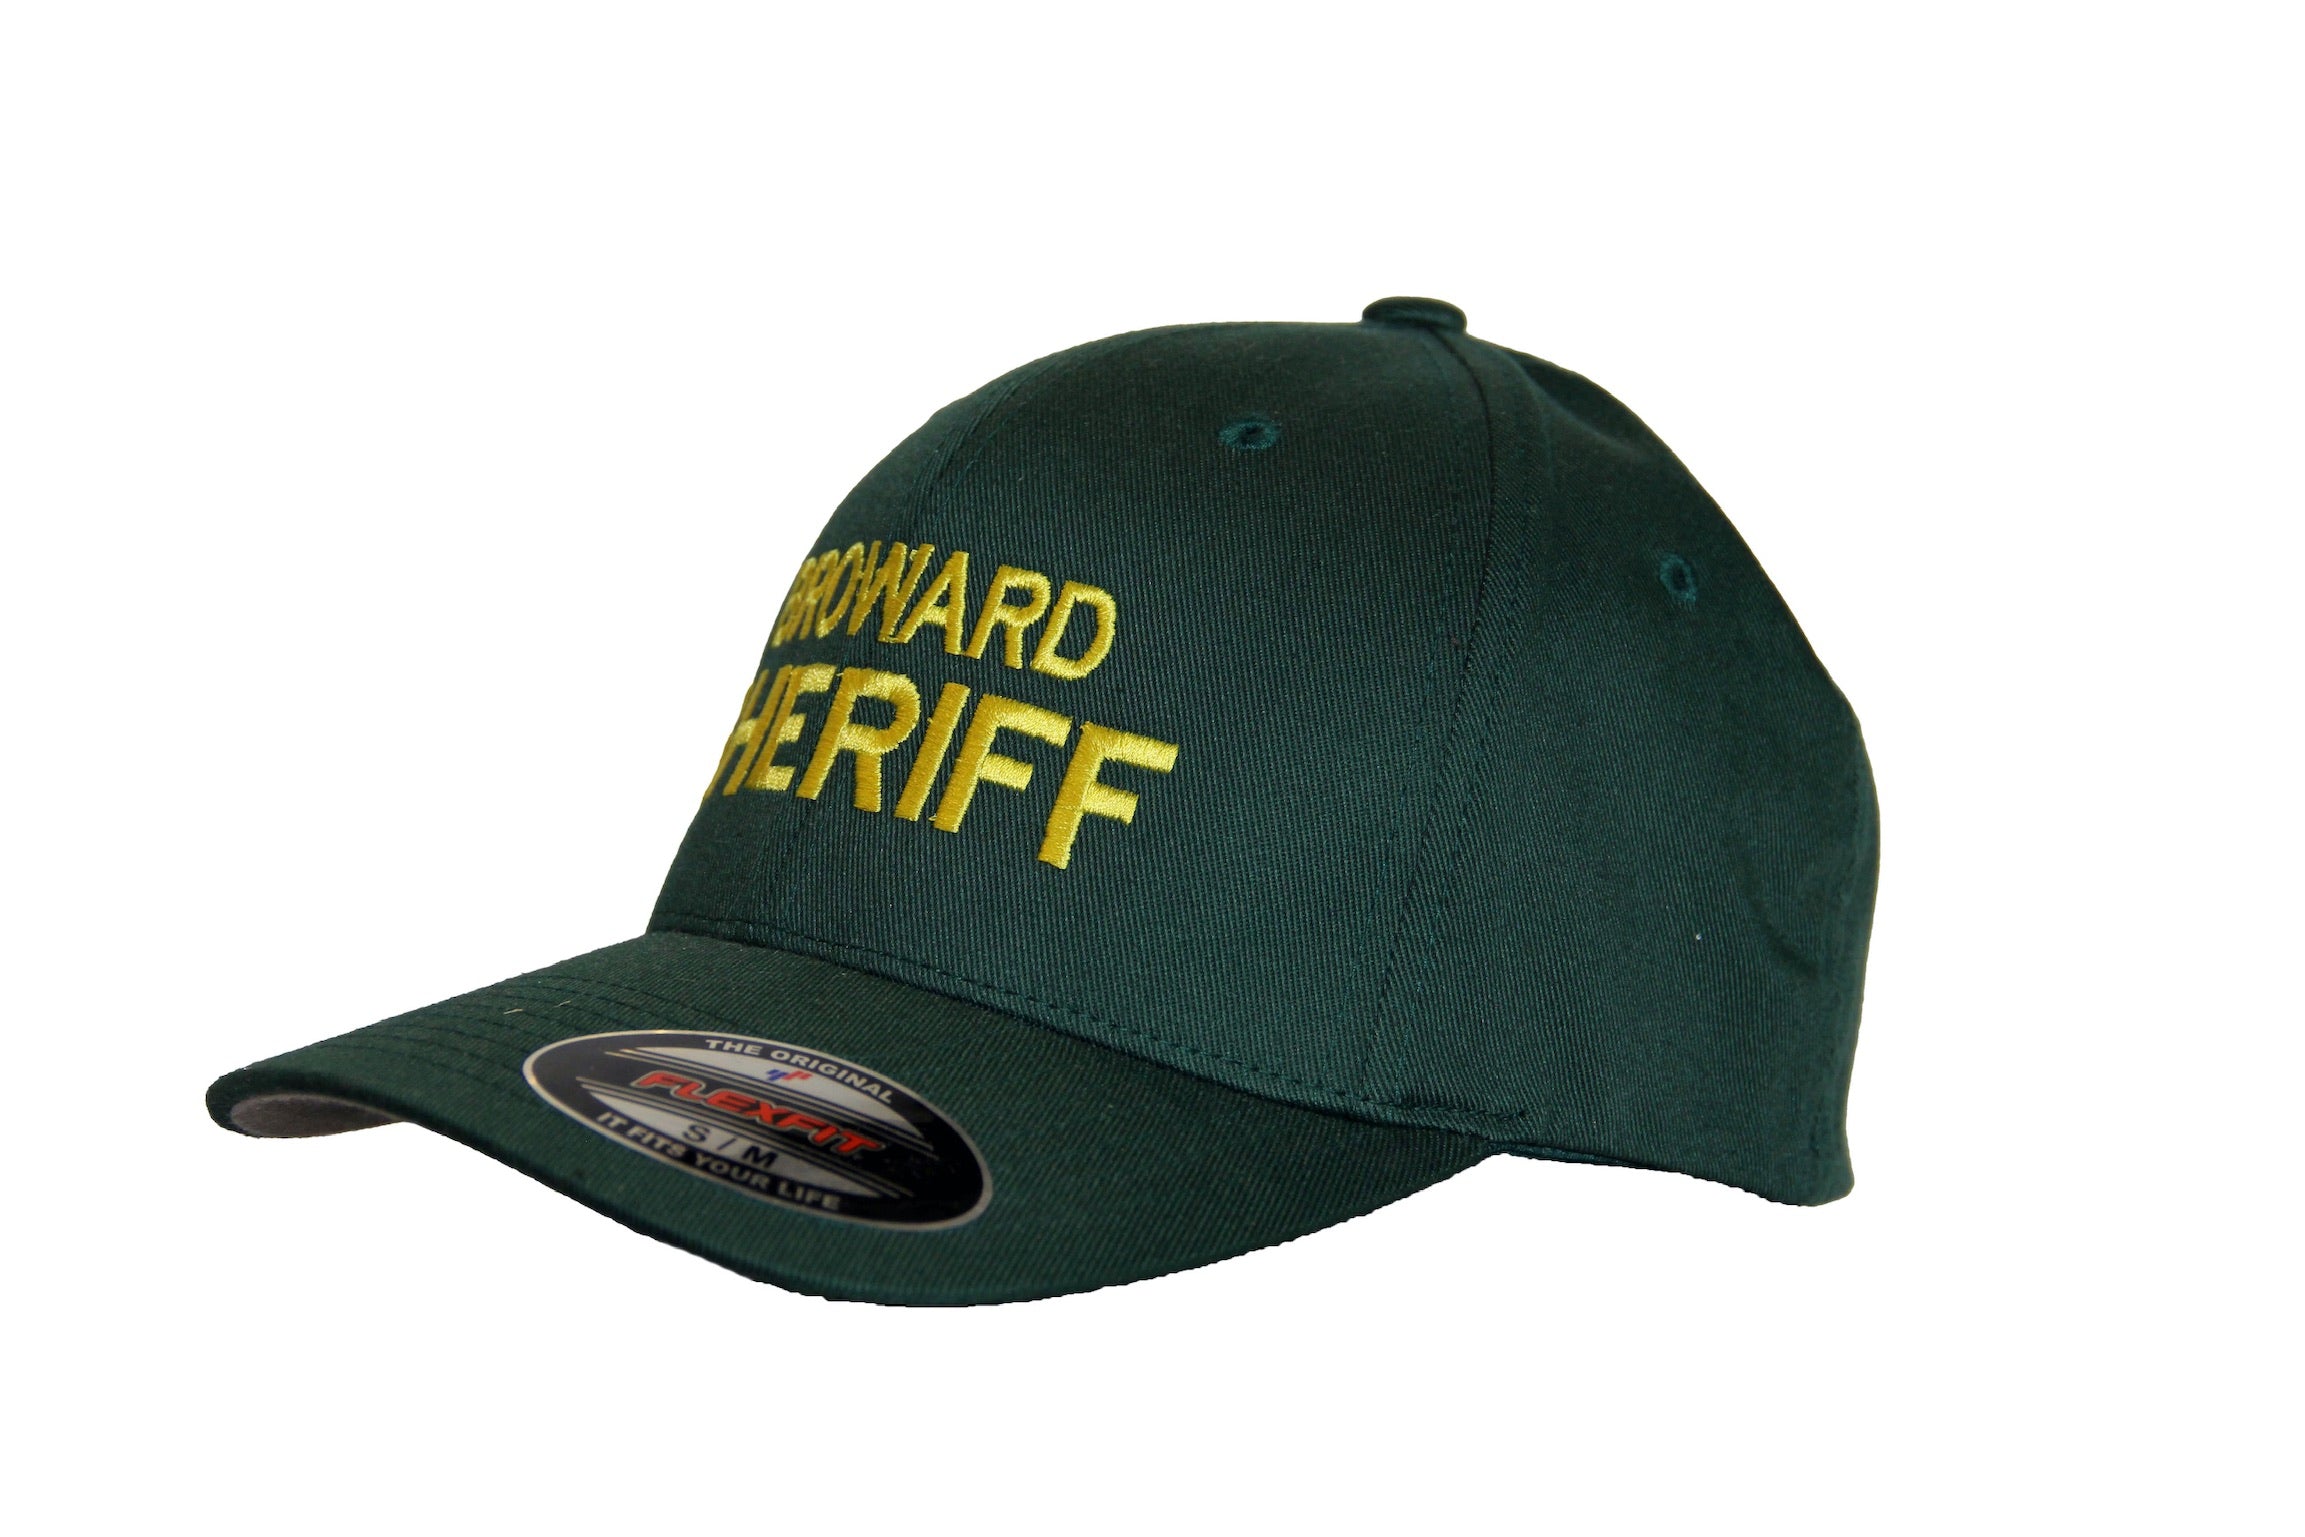 Broward Sheriff Office Flexfit Adult Wooly Cap